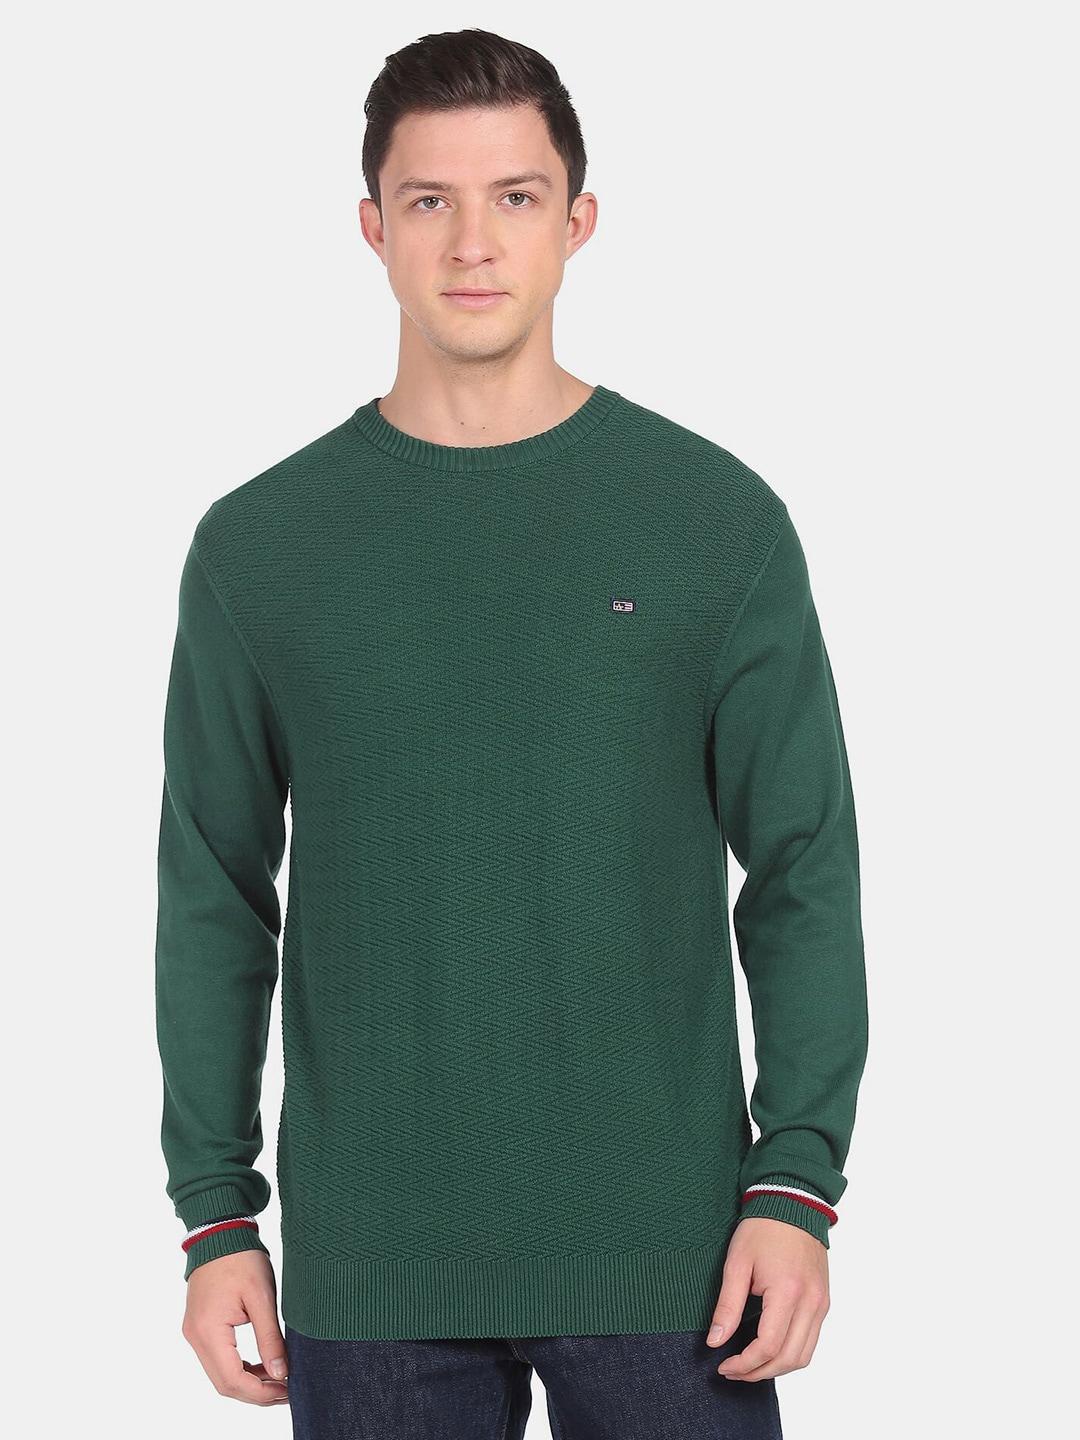 arrow-sport-men-green-pure-cotton-pullover-sweater